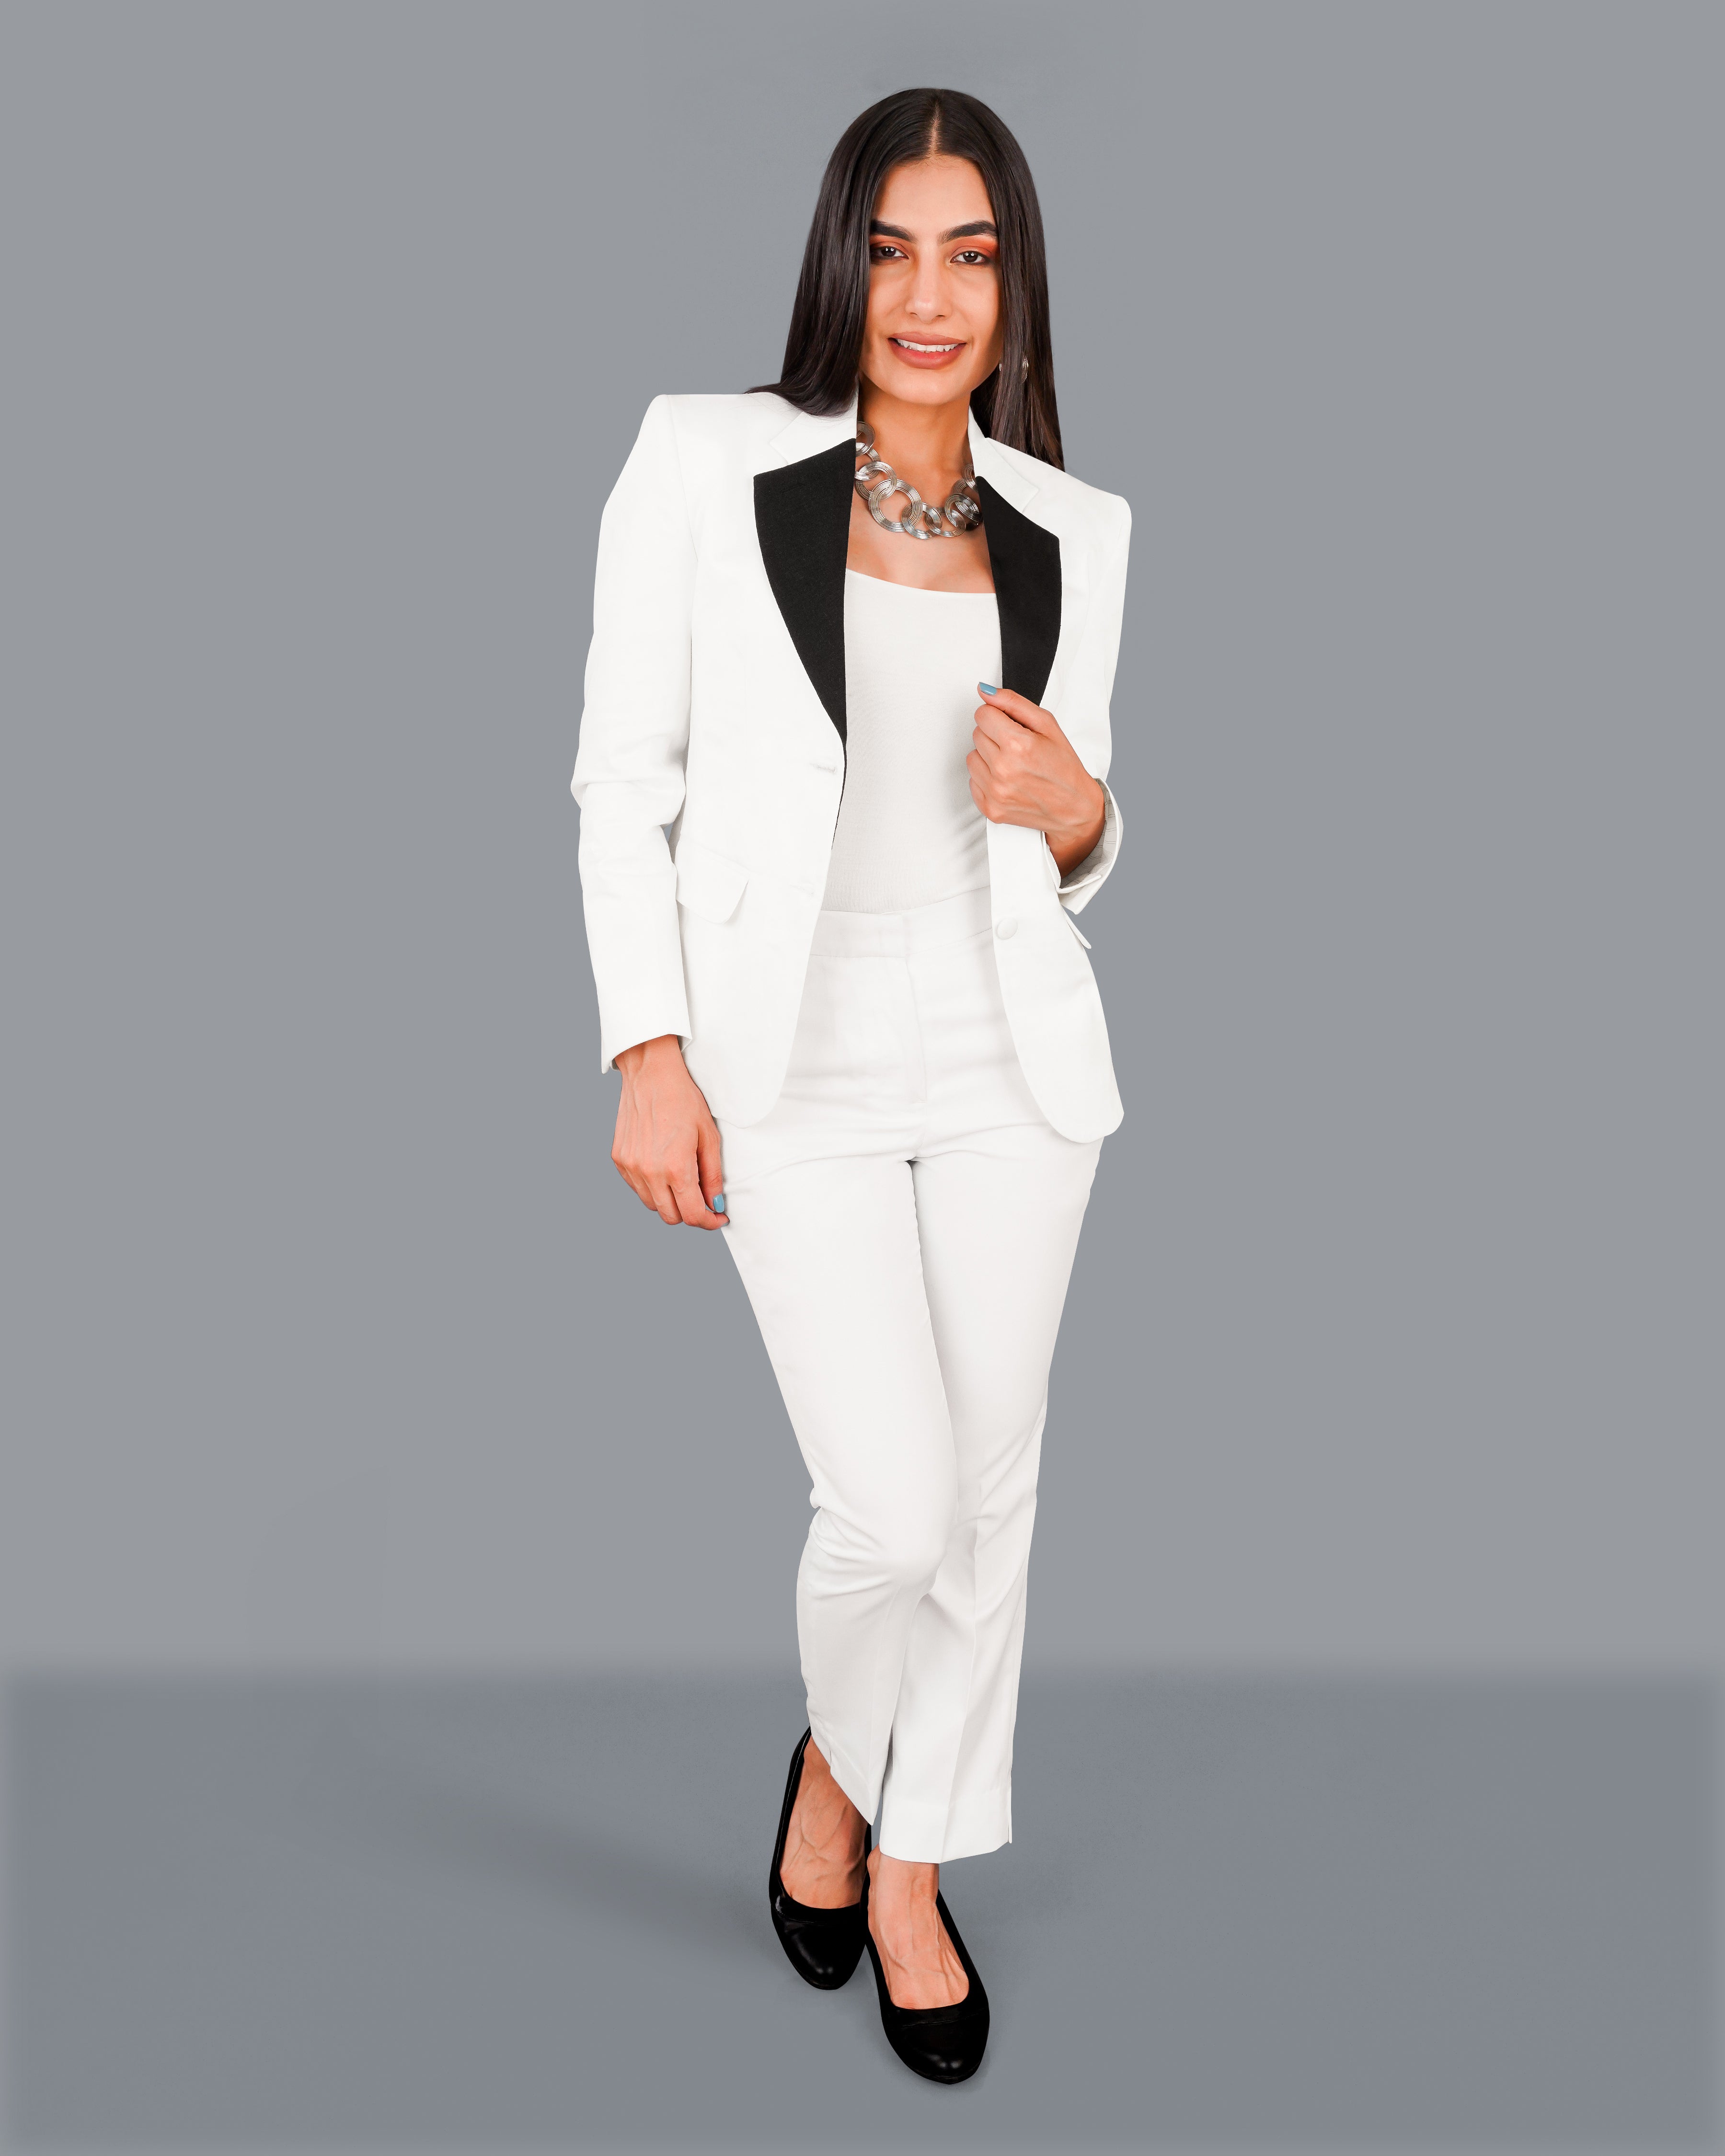 Bright White with Black Premium Cotton Women's Pant WOT005-24, WOT005-26, WOT005-28, WOT005-30, WOT005-32, WOT005-34